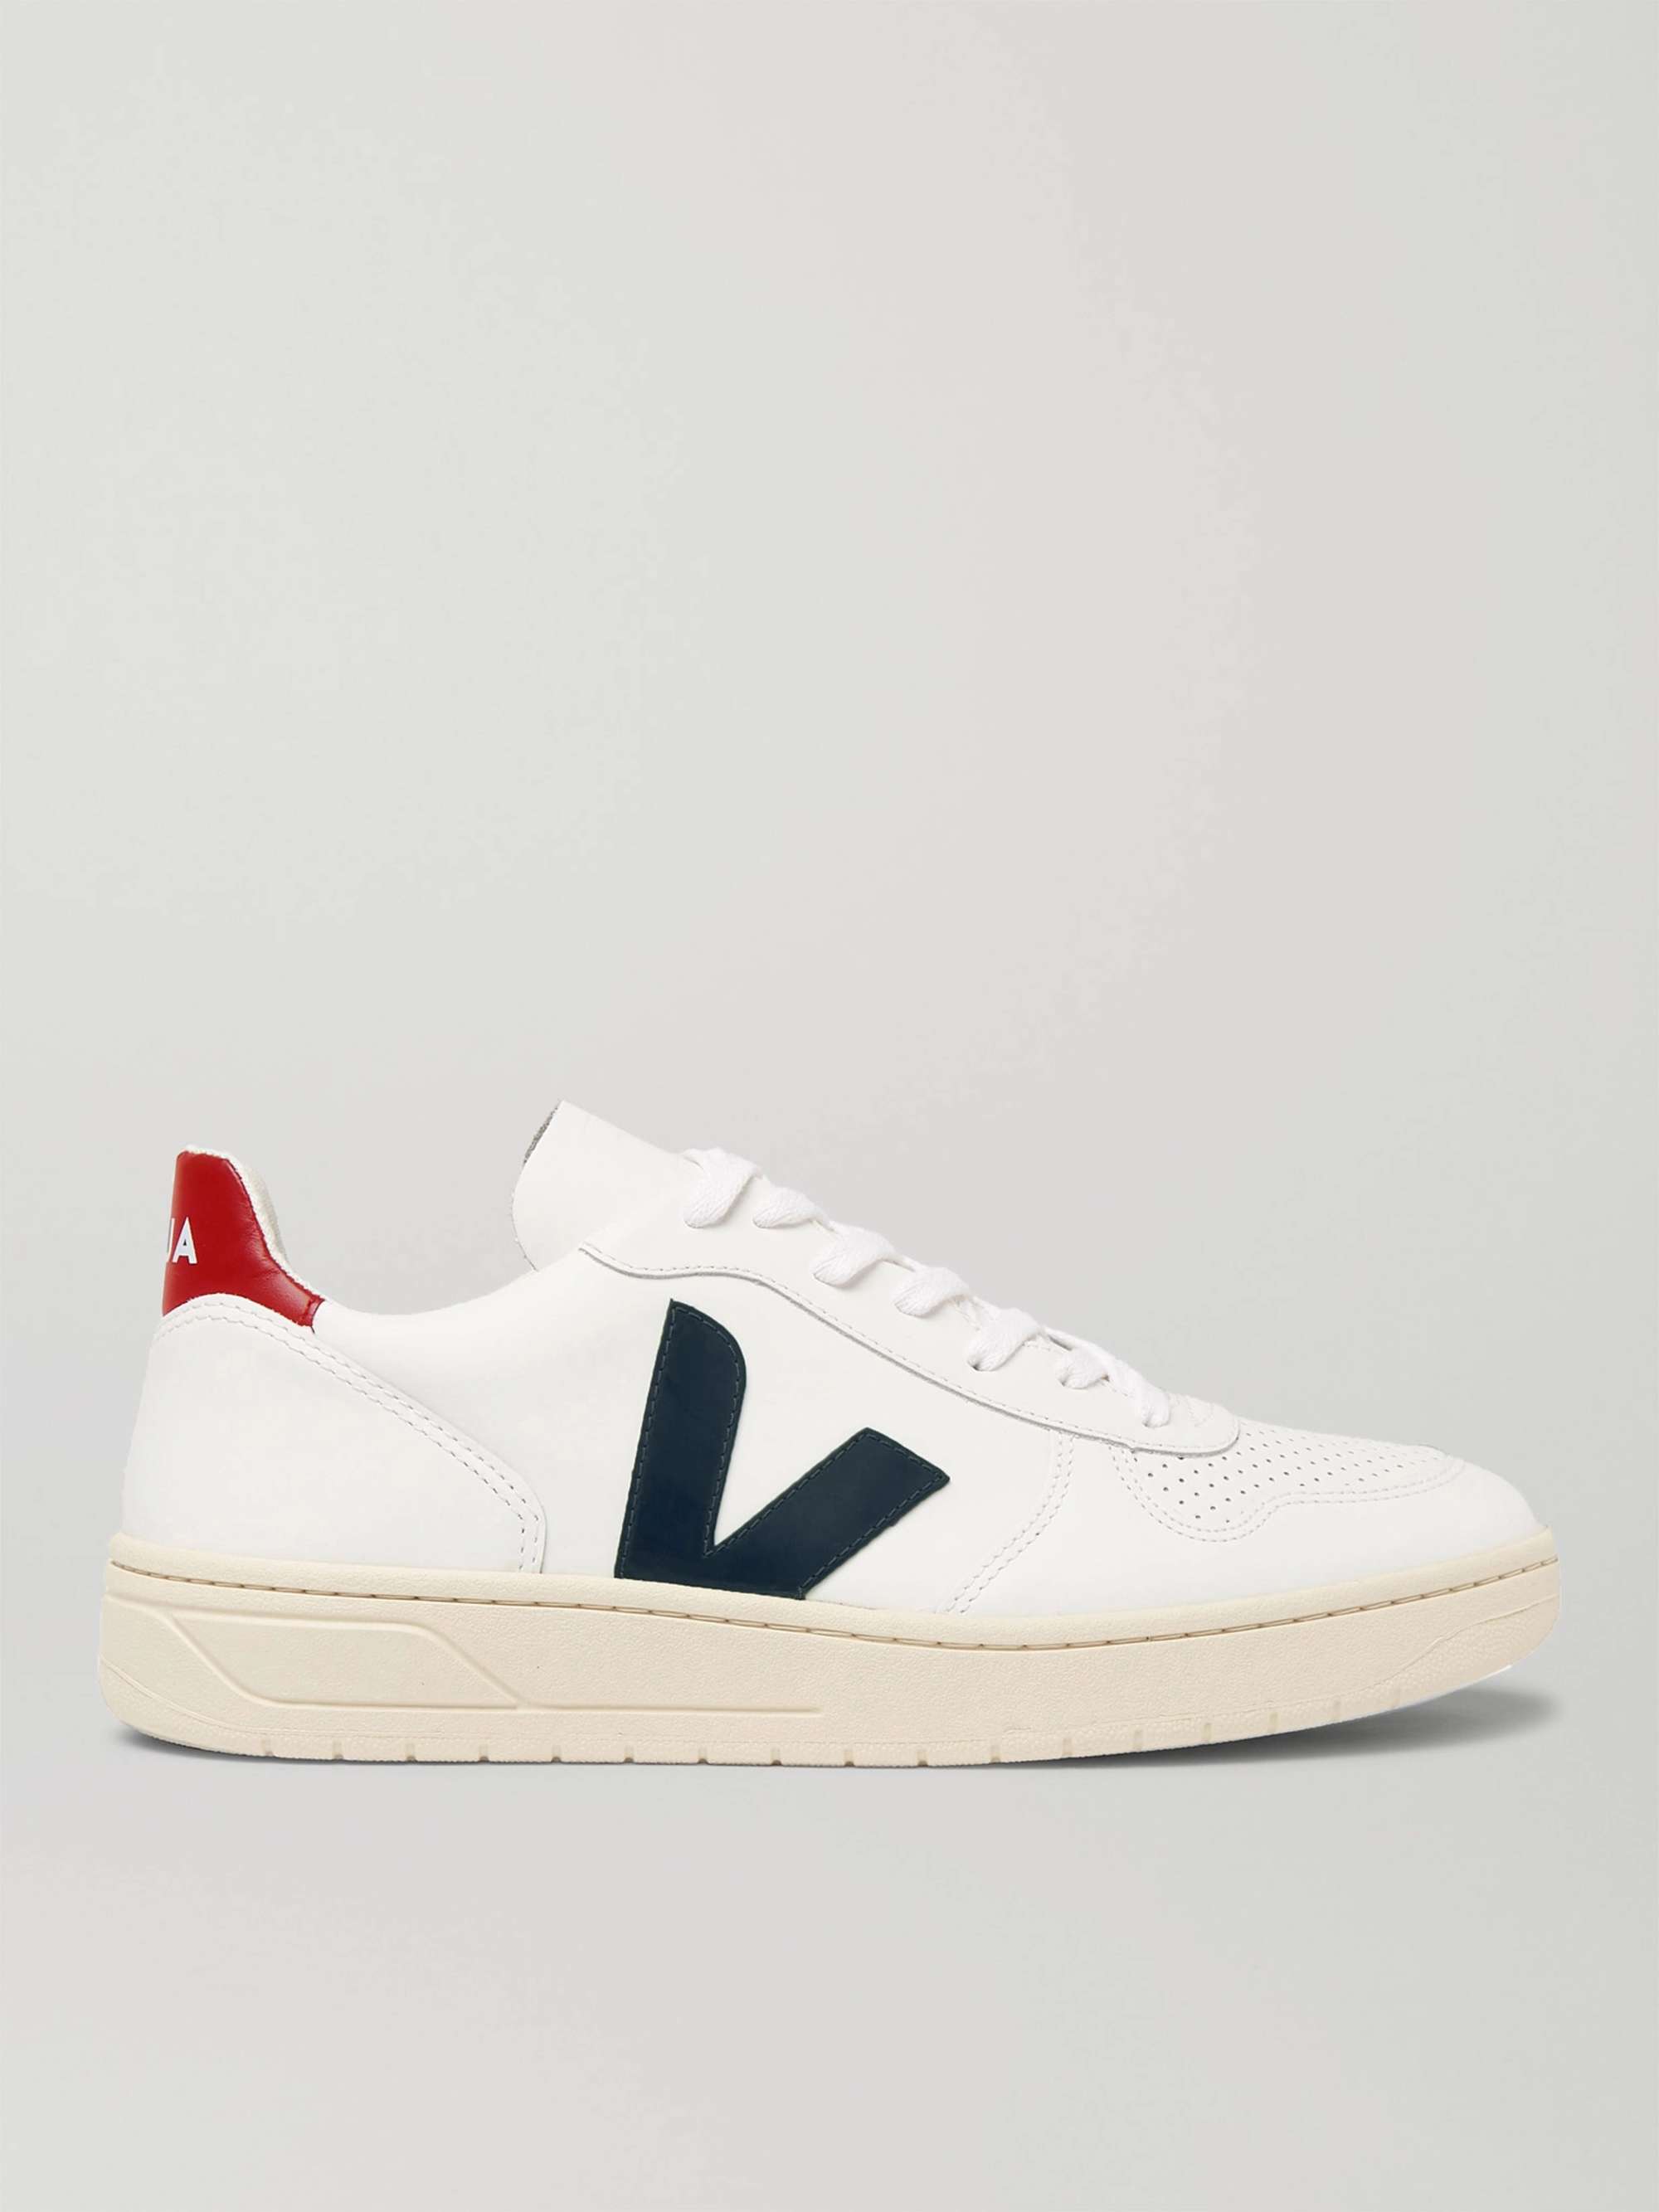 White V-10 Rubber-Trimmed Leather Sneakers | VEJA | MR PORTER